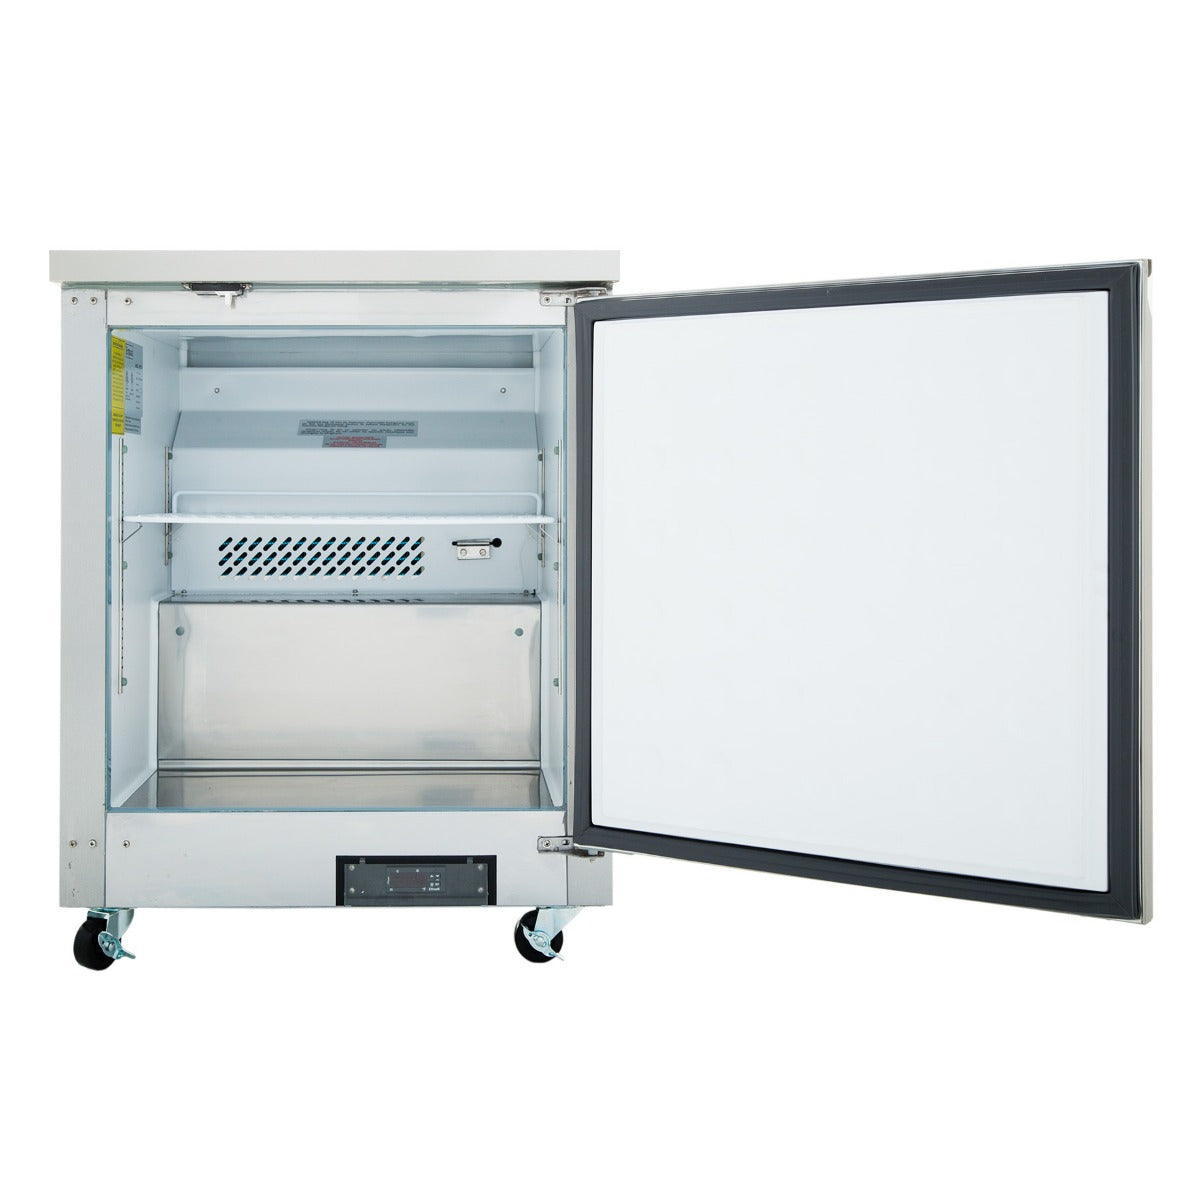 Empura E-KUC27 27.8" Stainless Steel Undercounter Refrigerator With 1 Door - 5.4 Cu Ft, 115 Volts